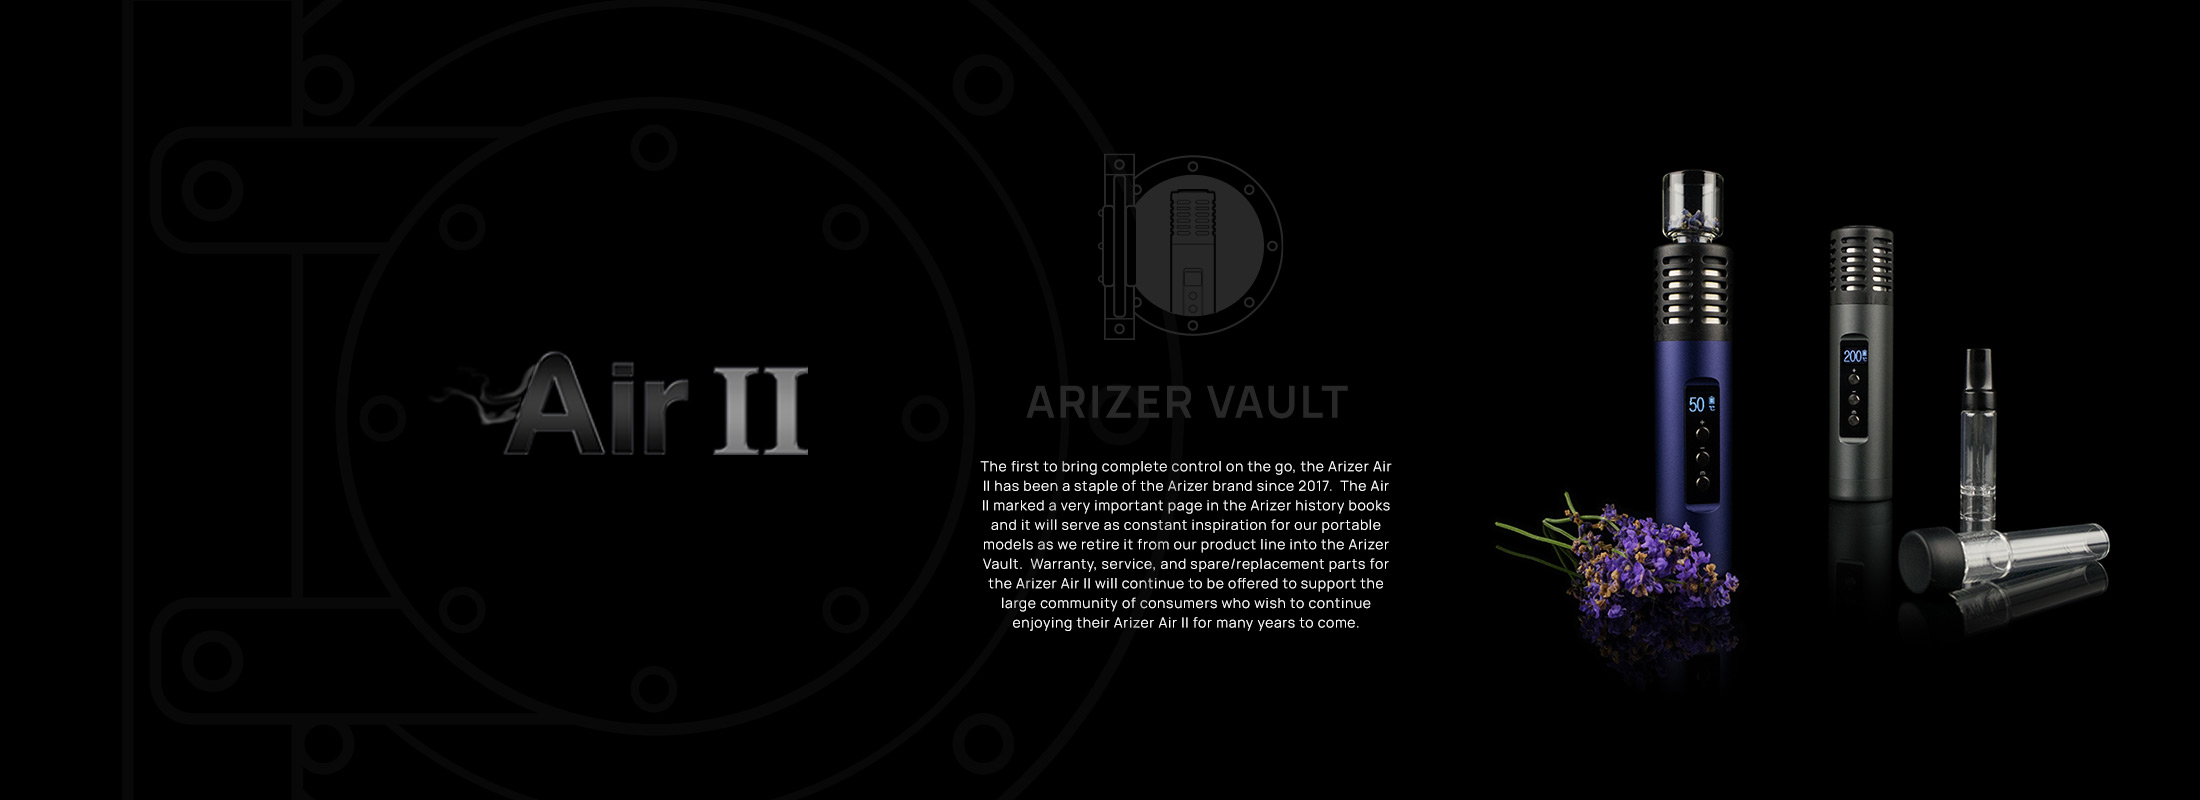 Air II Vault